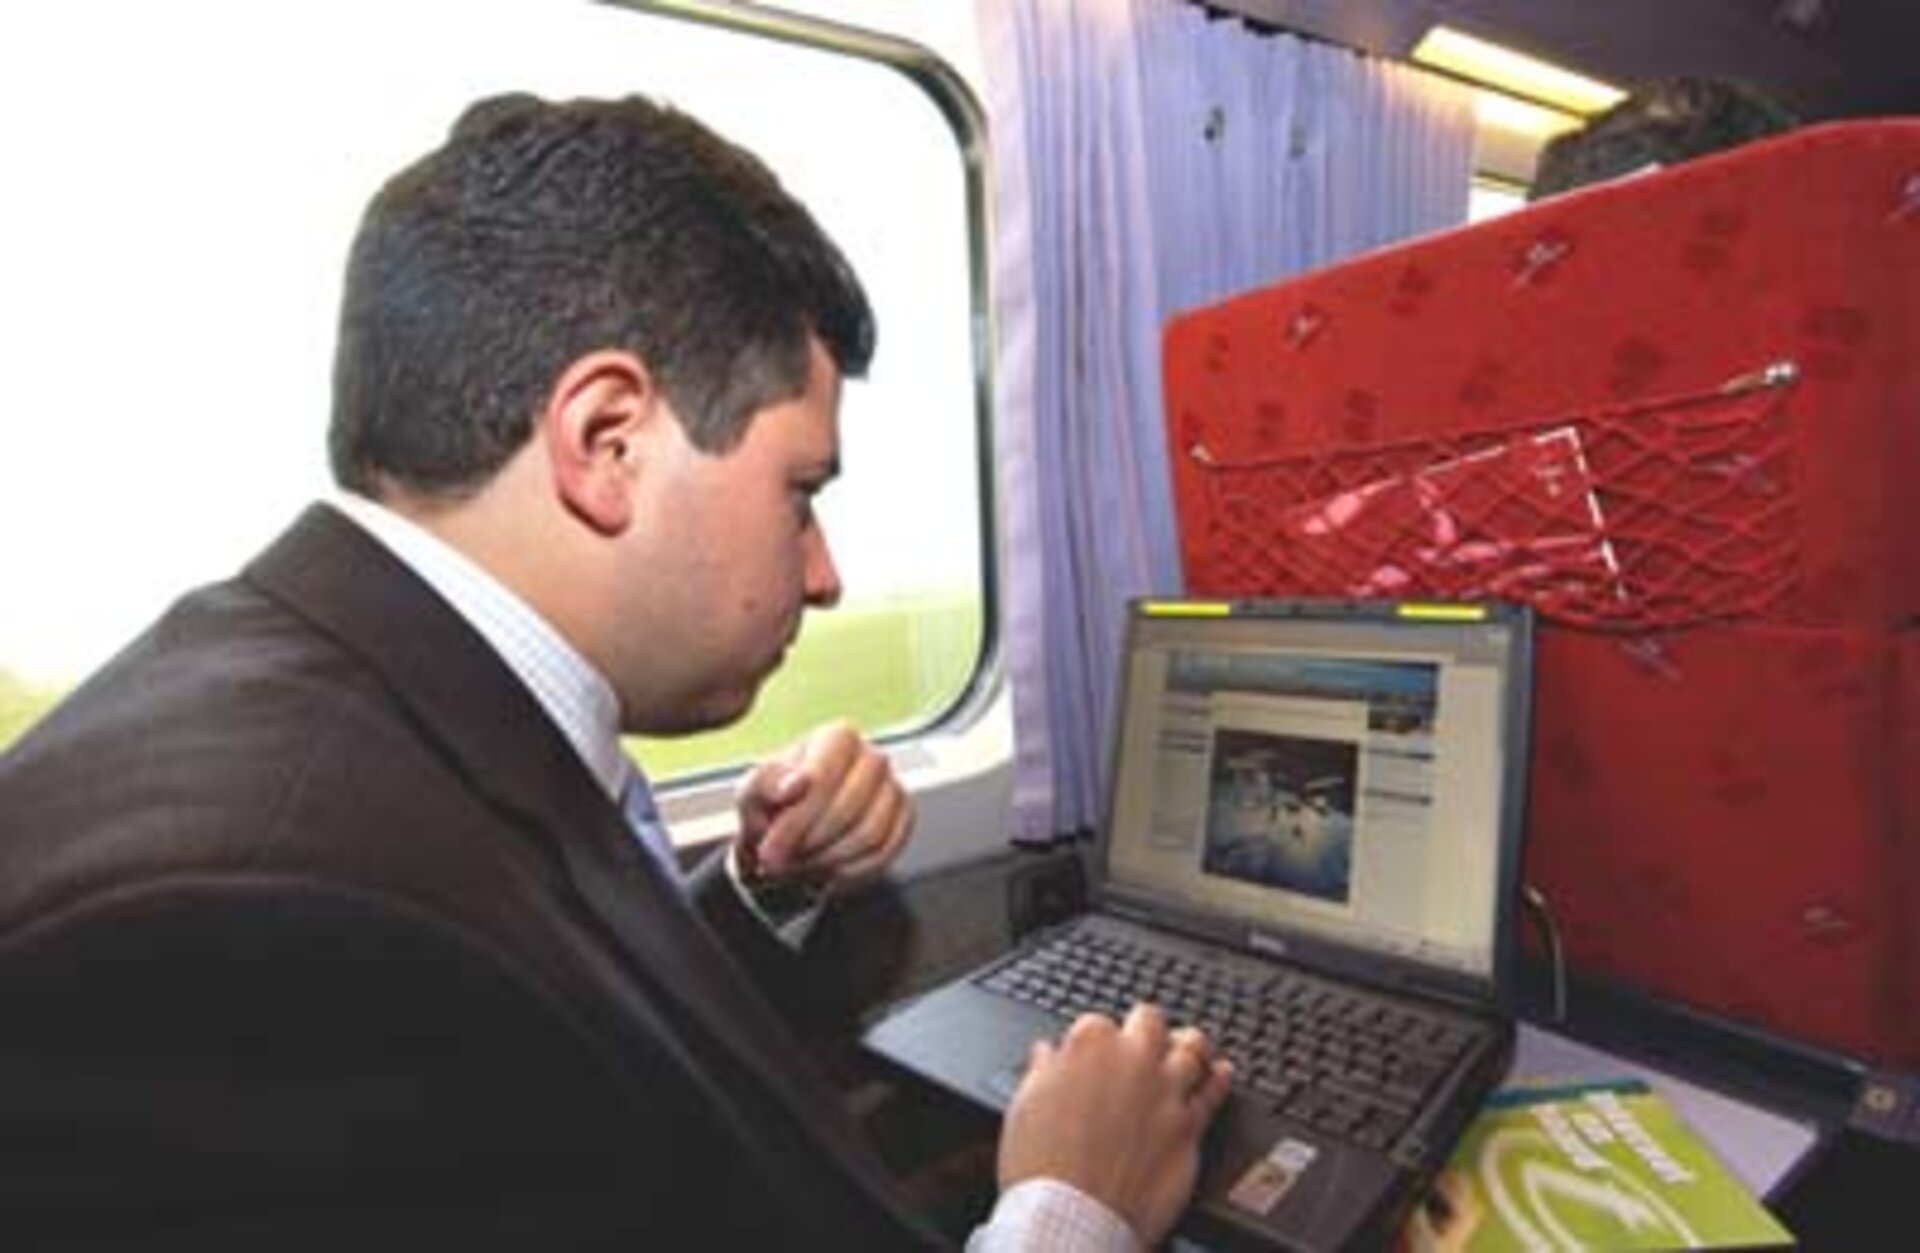 Internet via satellite on board trains